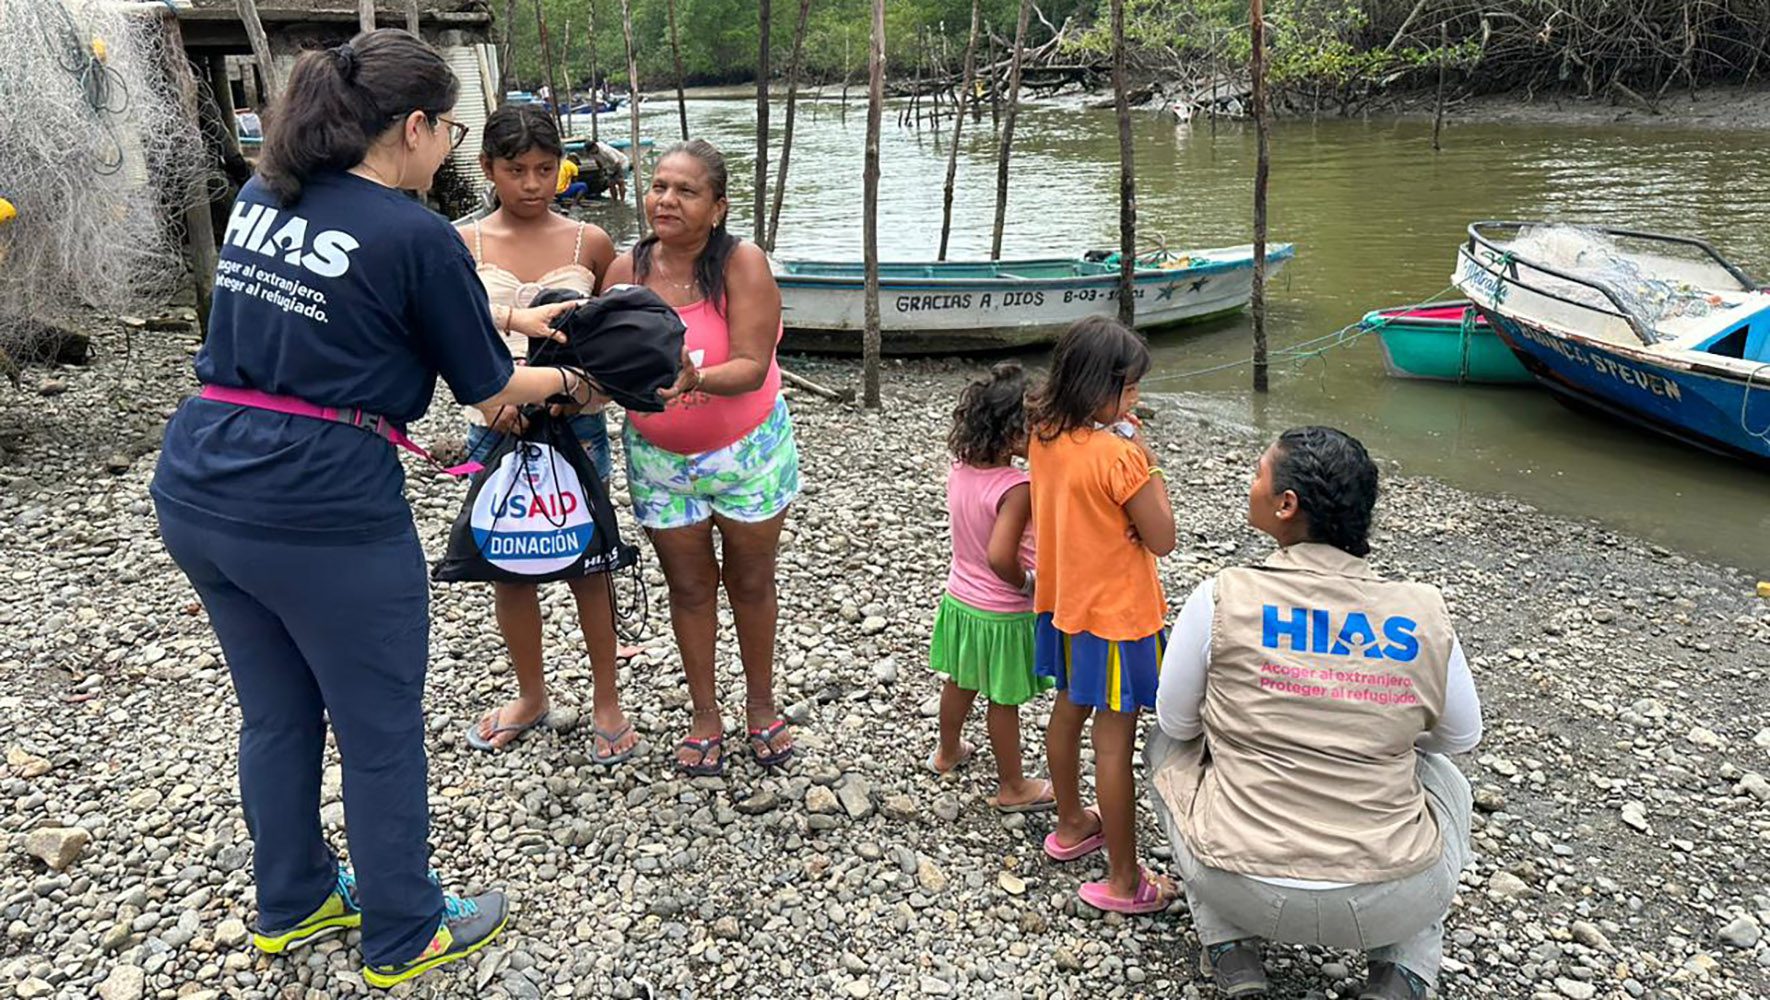 giving earthquake victims hygiene kits at water edge